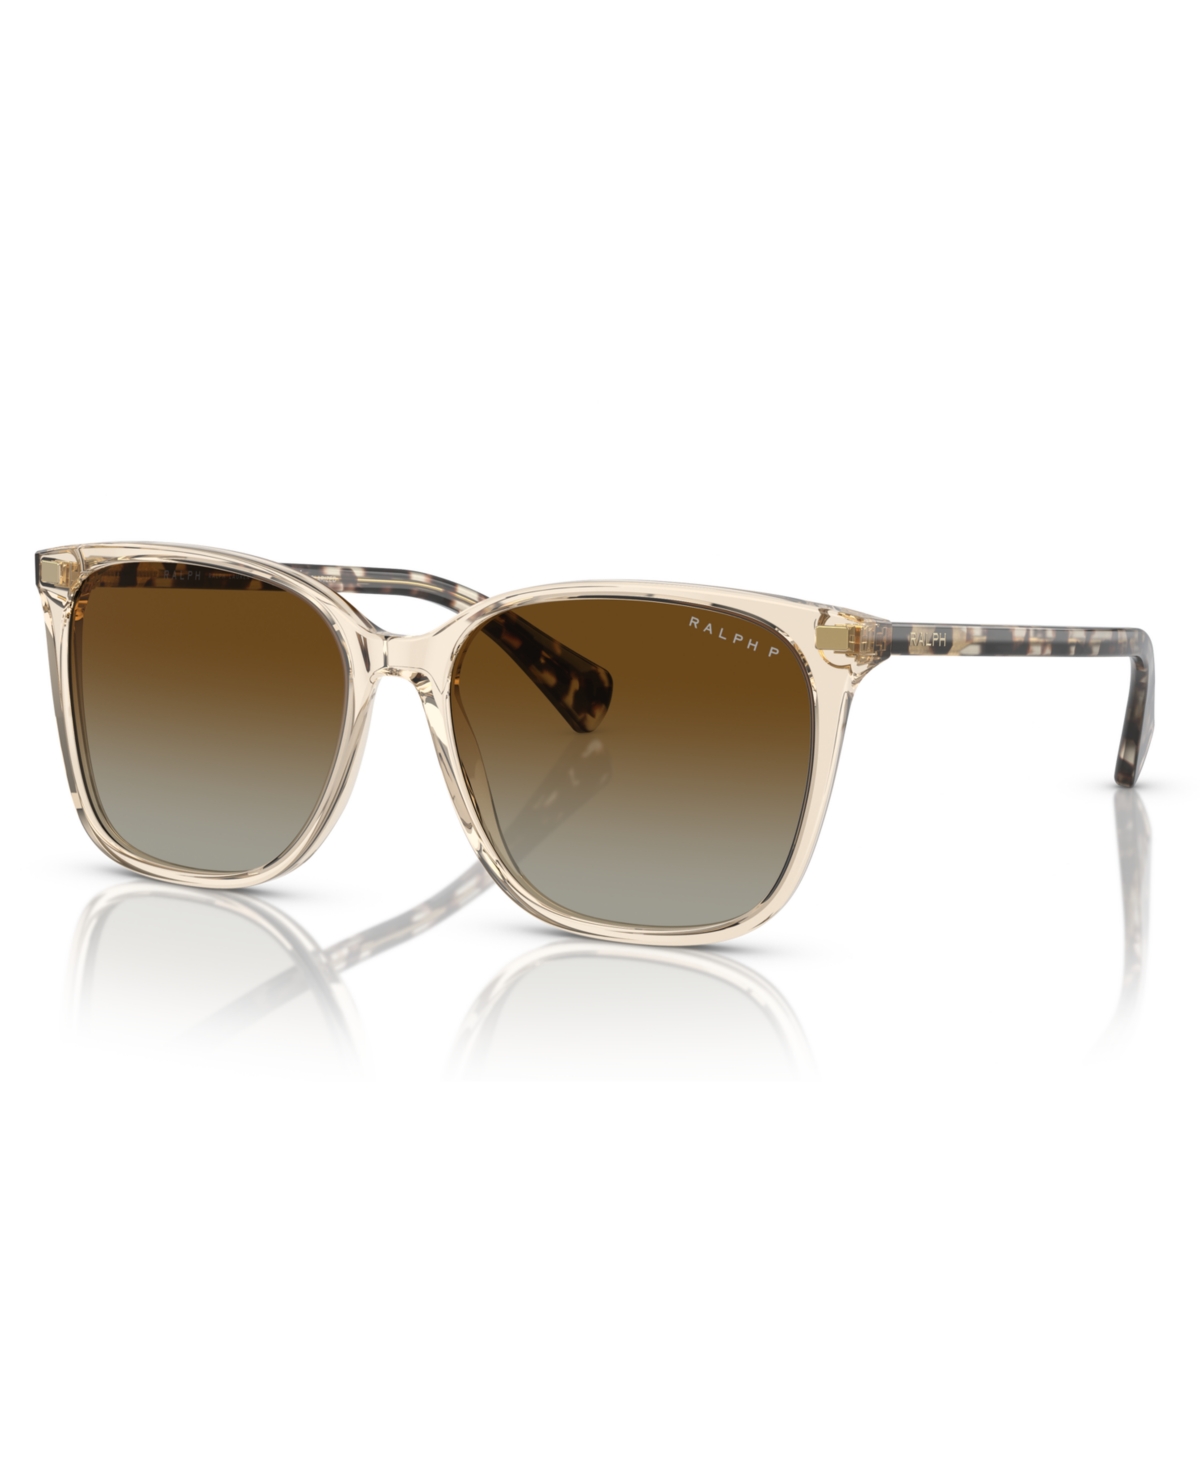 Women's Polarized Sunglasses, RA529356-yp - Shiny Black